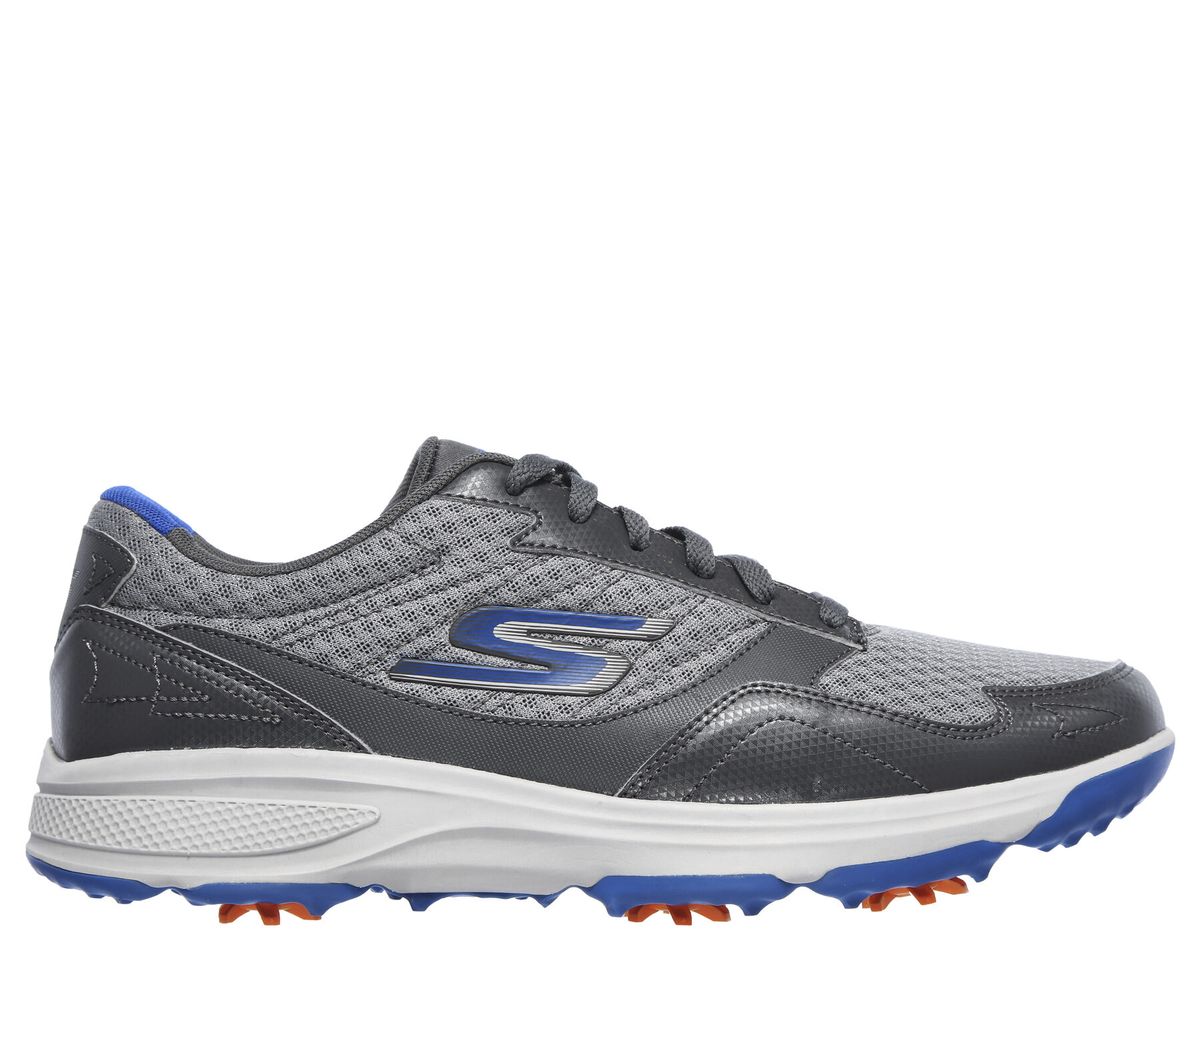 Skechers Go Golf Torque Sport Men's Shoes - Charcoal/Blue - 54557/CCBL ...